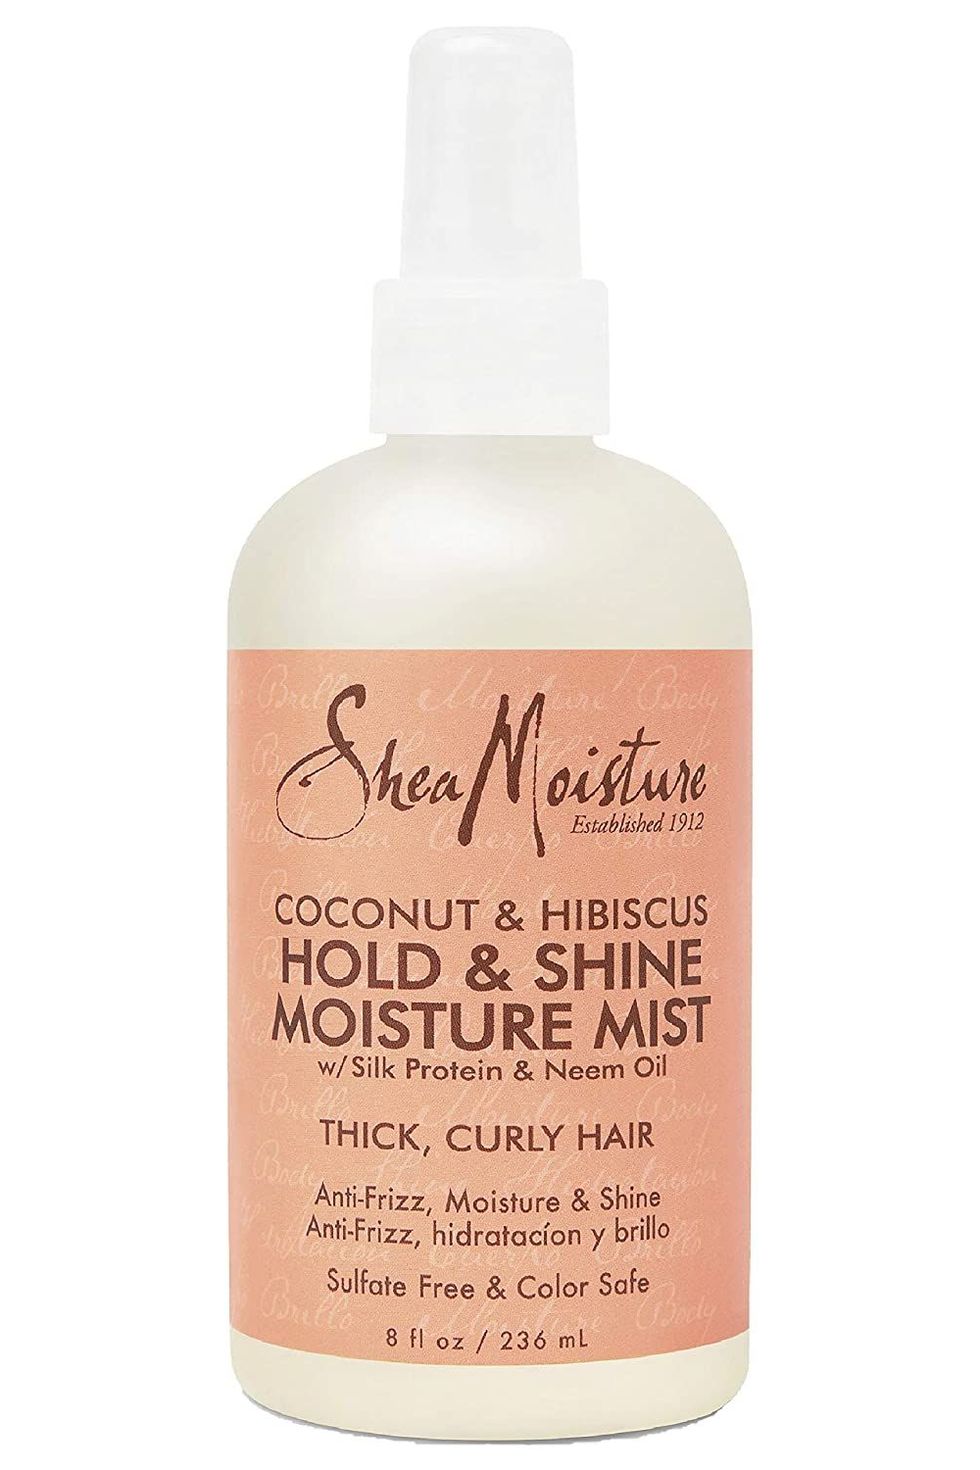 Coconut & Hibiscus Hold & Shine Moisture Mist